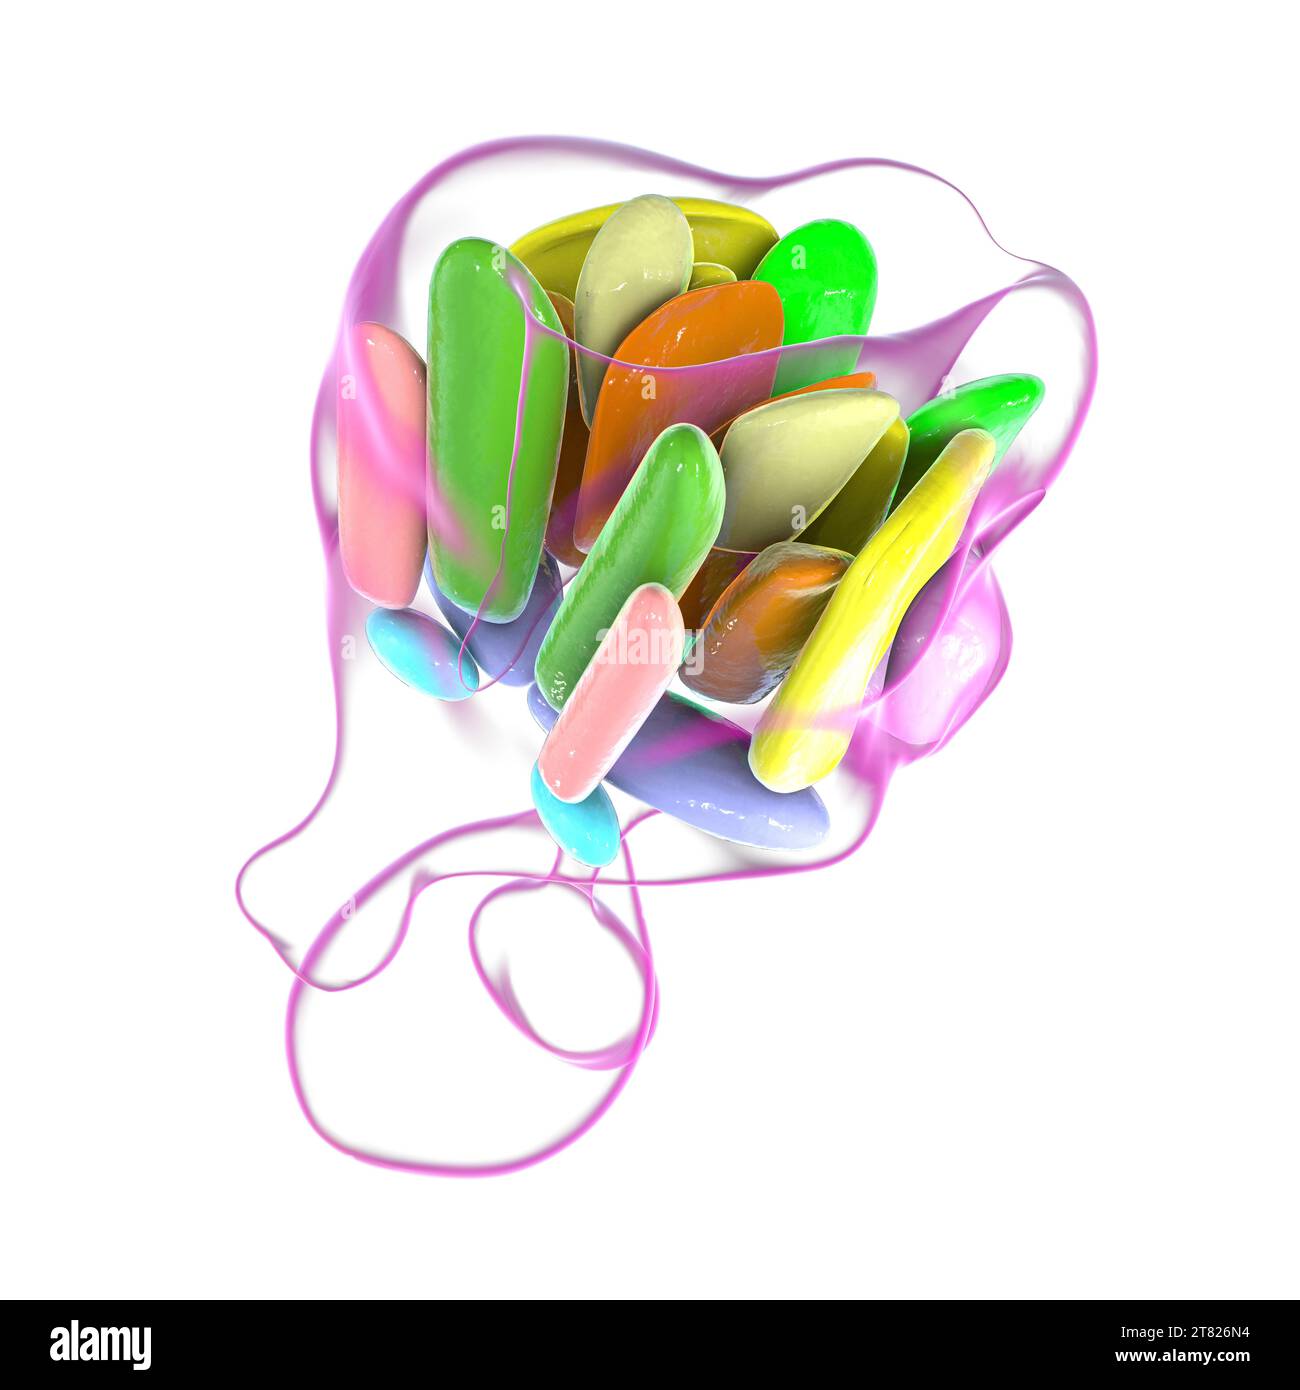 Hypothalamic nuclei, illustration Stock Photo